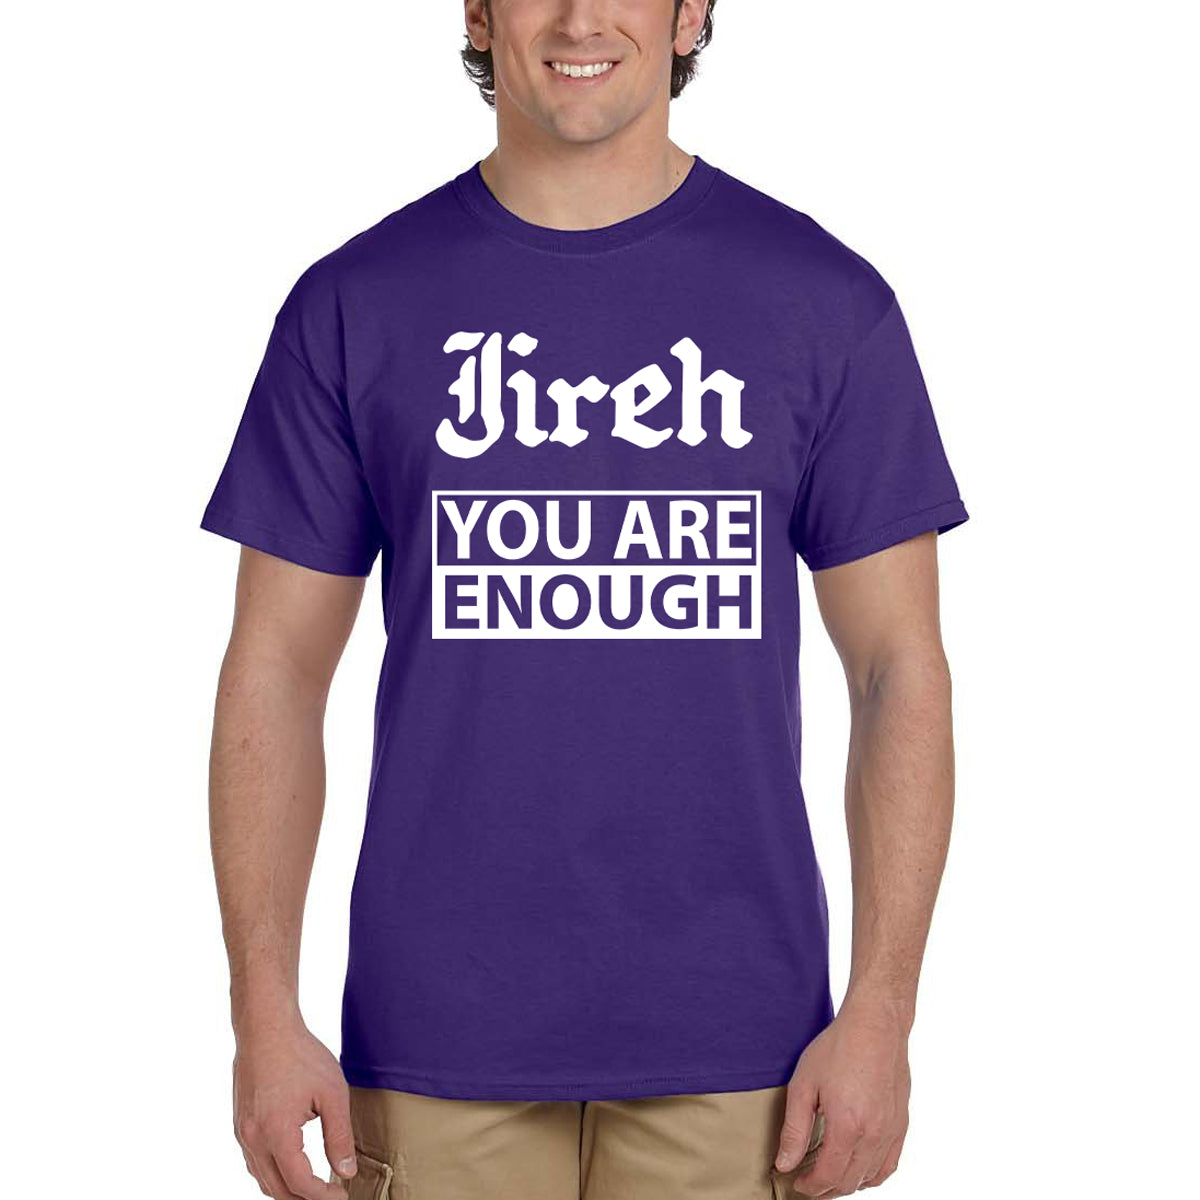 Jireh You Are Enough Men's T-Shirt